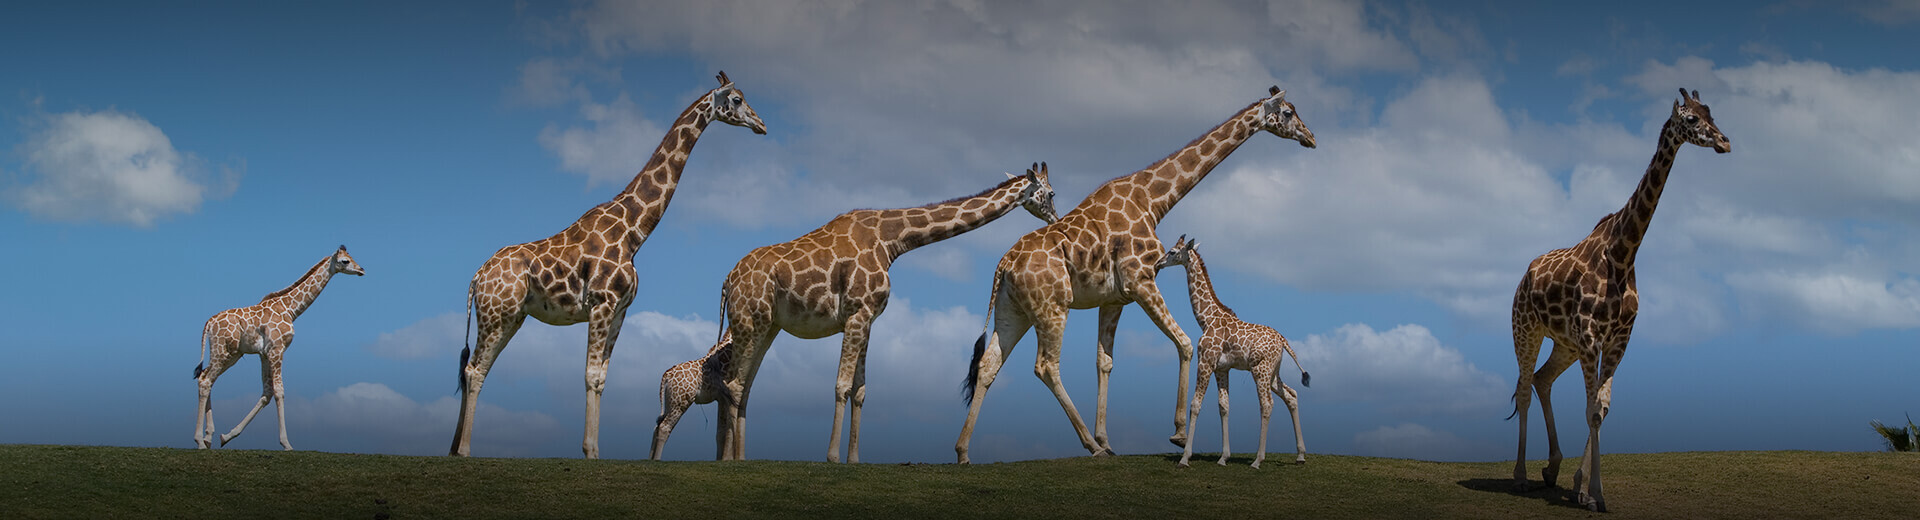 Giraffes at the Safari Park